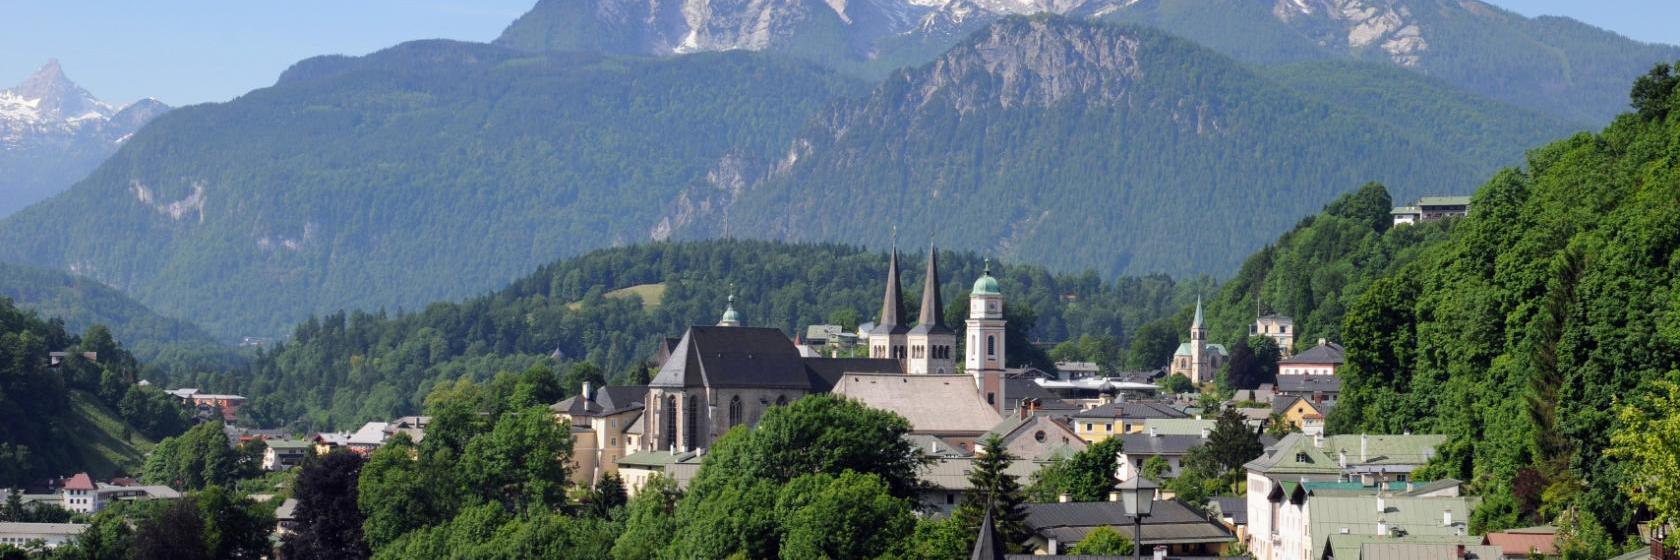 10 Best Berchtesgaden Hotels Germany From 49